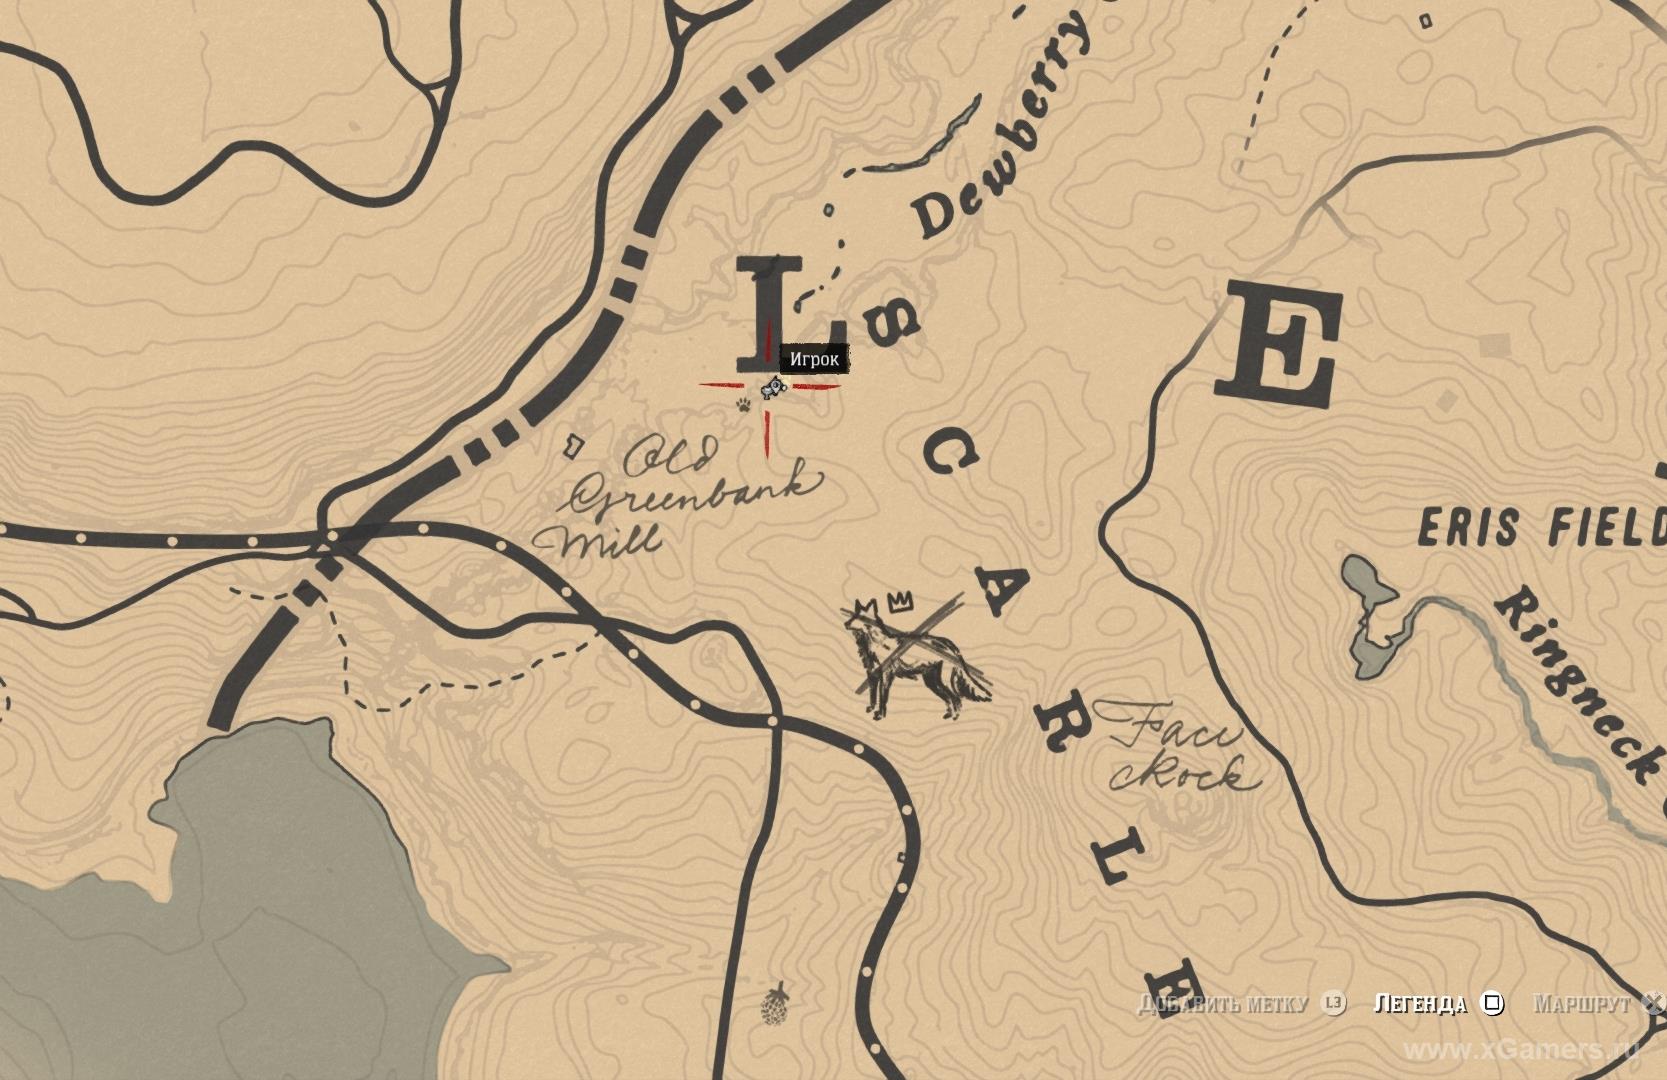 Location the legendary coyote